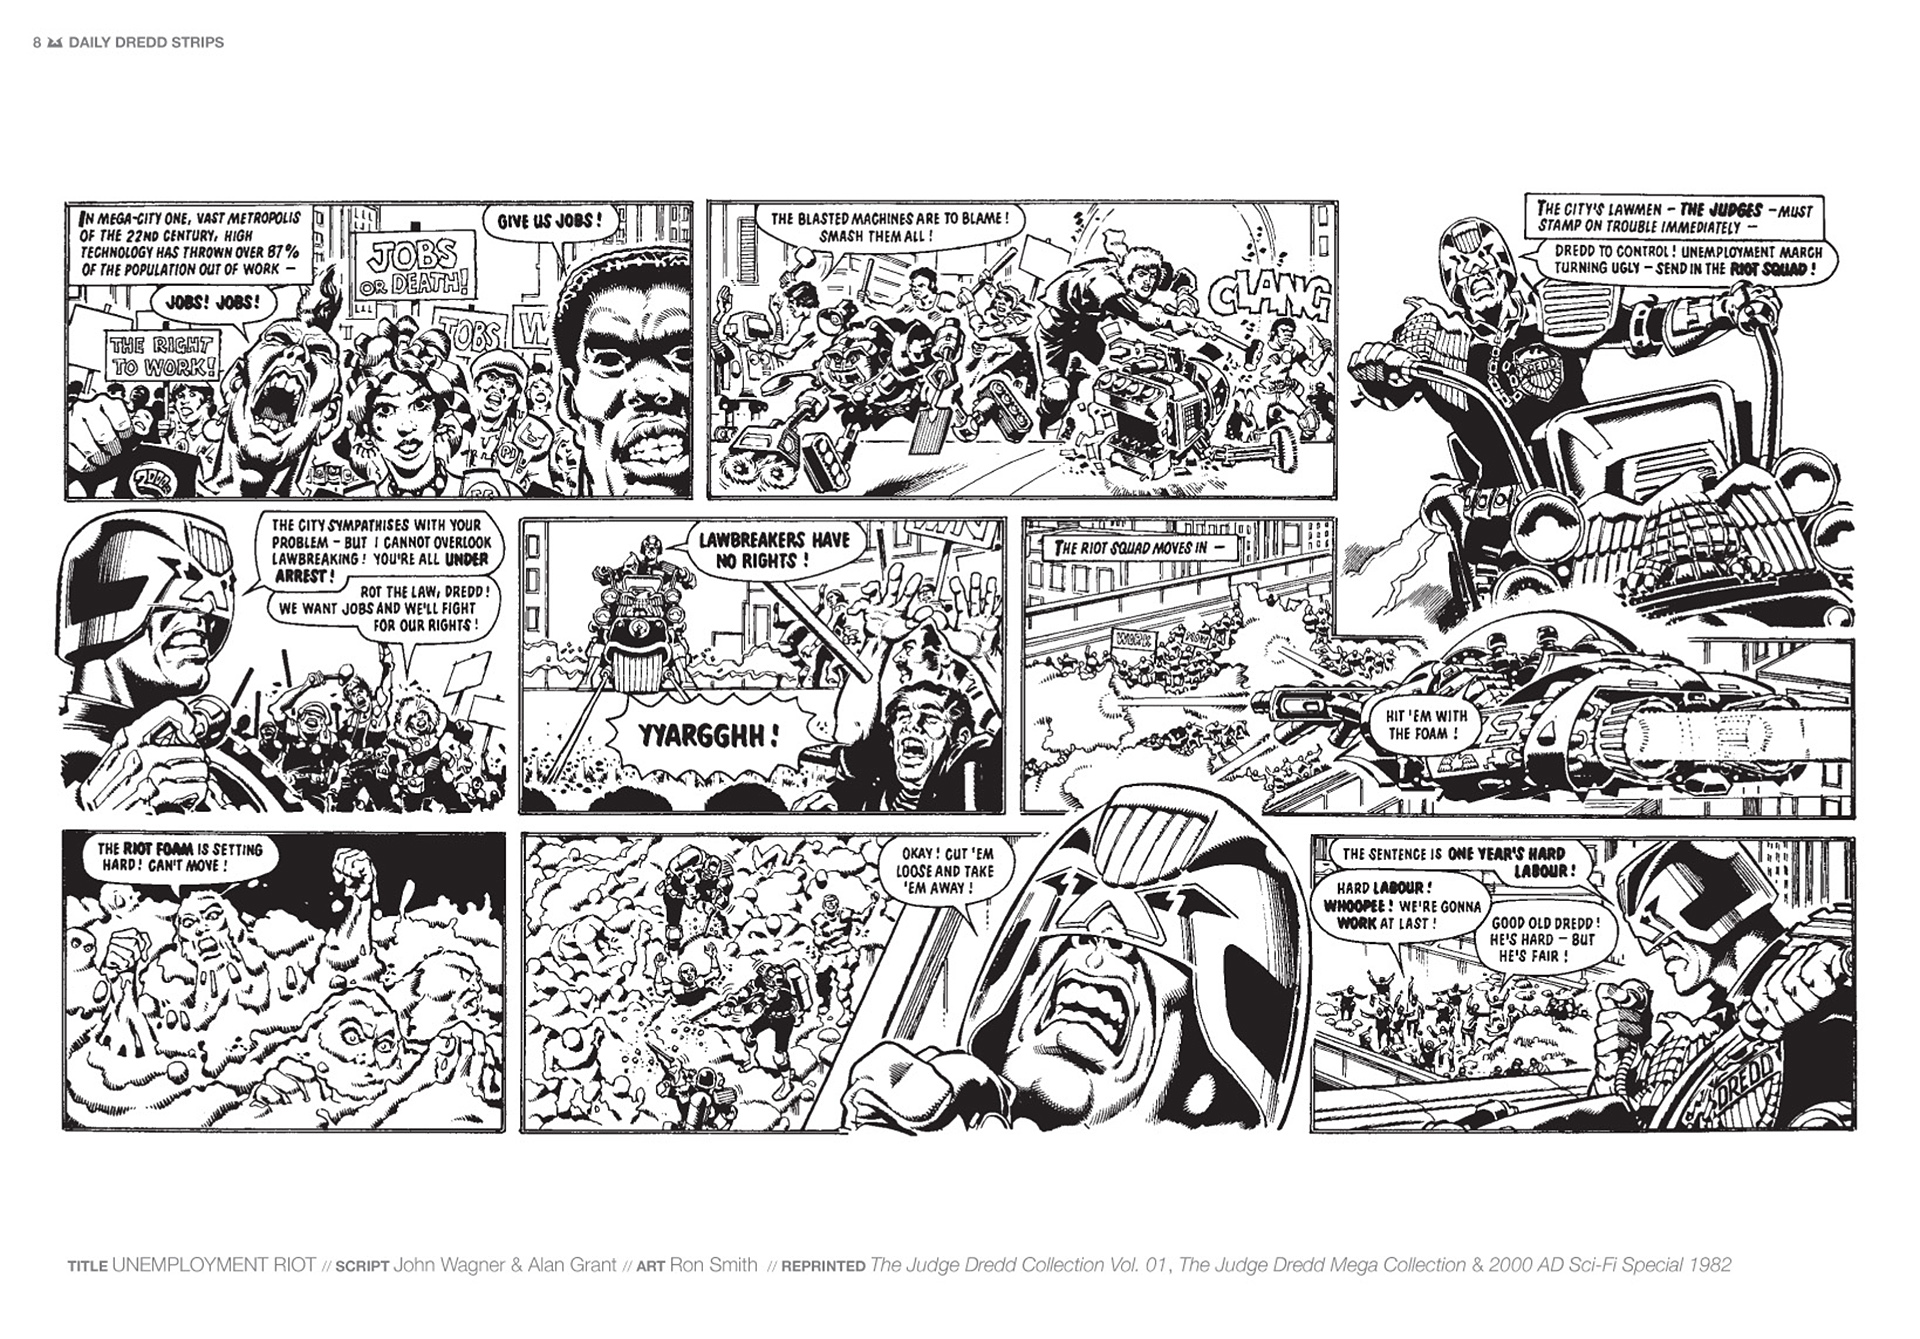 Read online Judge Dredd: The Daily Dredds comic -  Issue # TPB 1 - 11